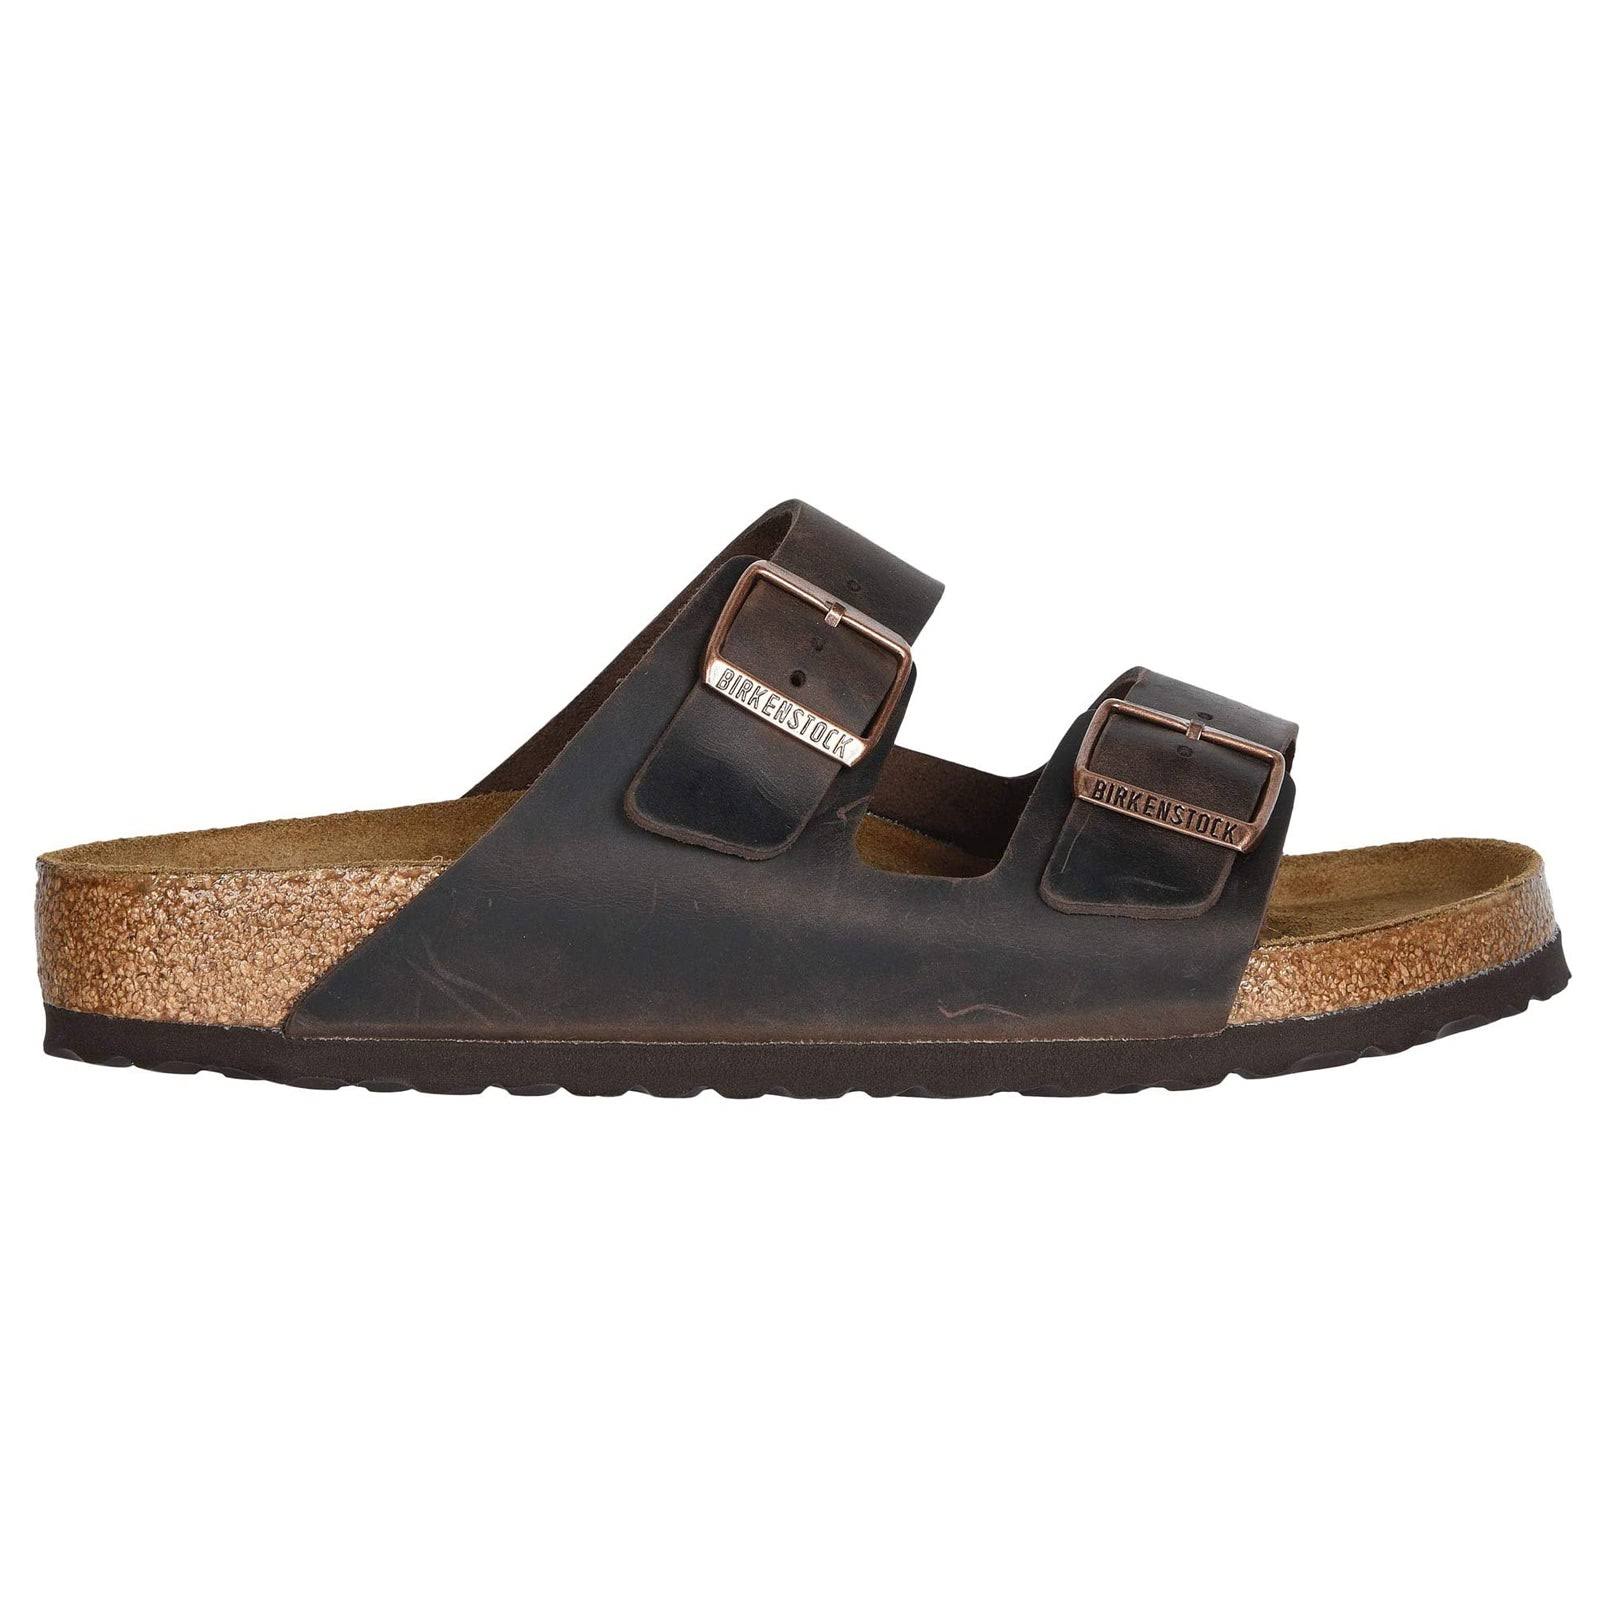 Birkenstock Arizona Soft Footbed Sandals - Habana Oiled Leather, Size 6 US